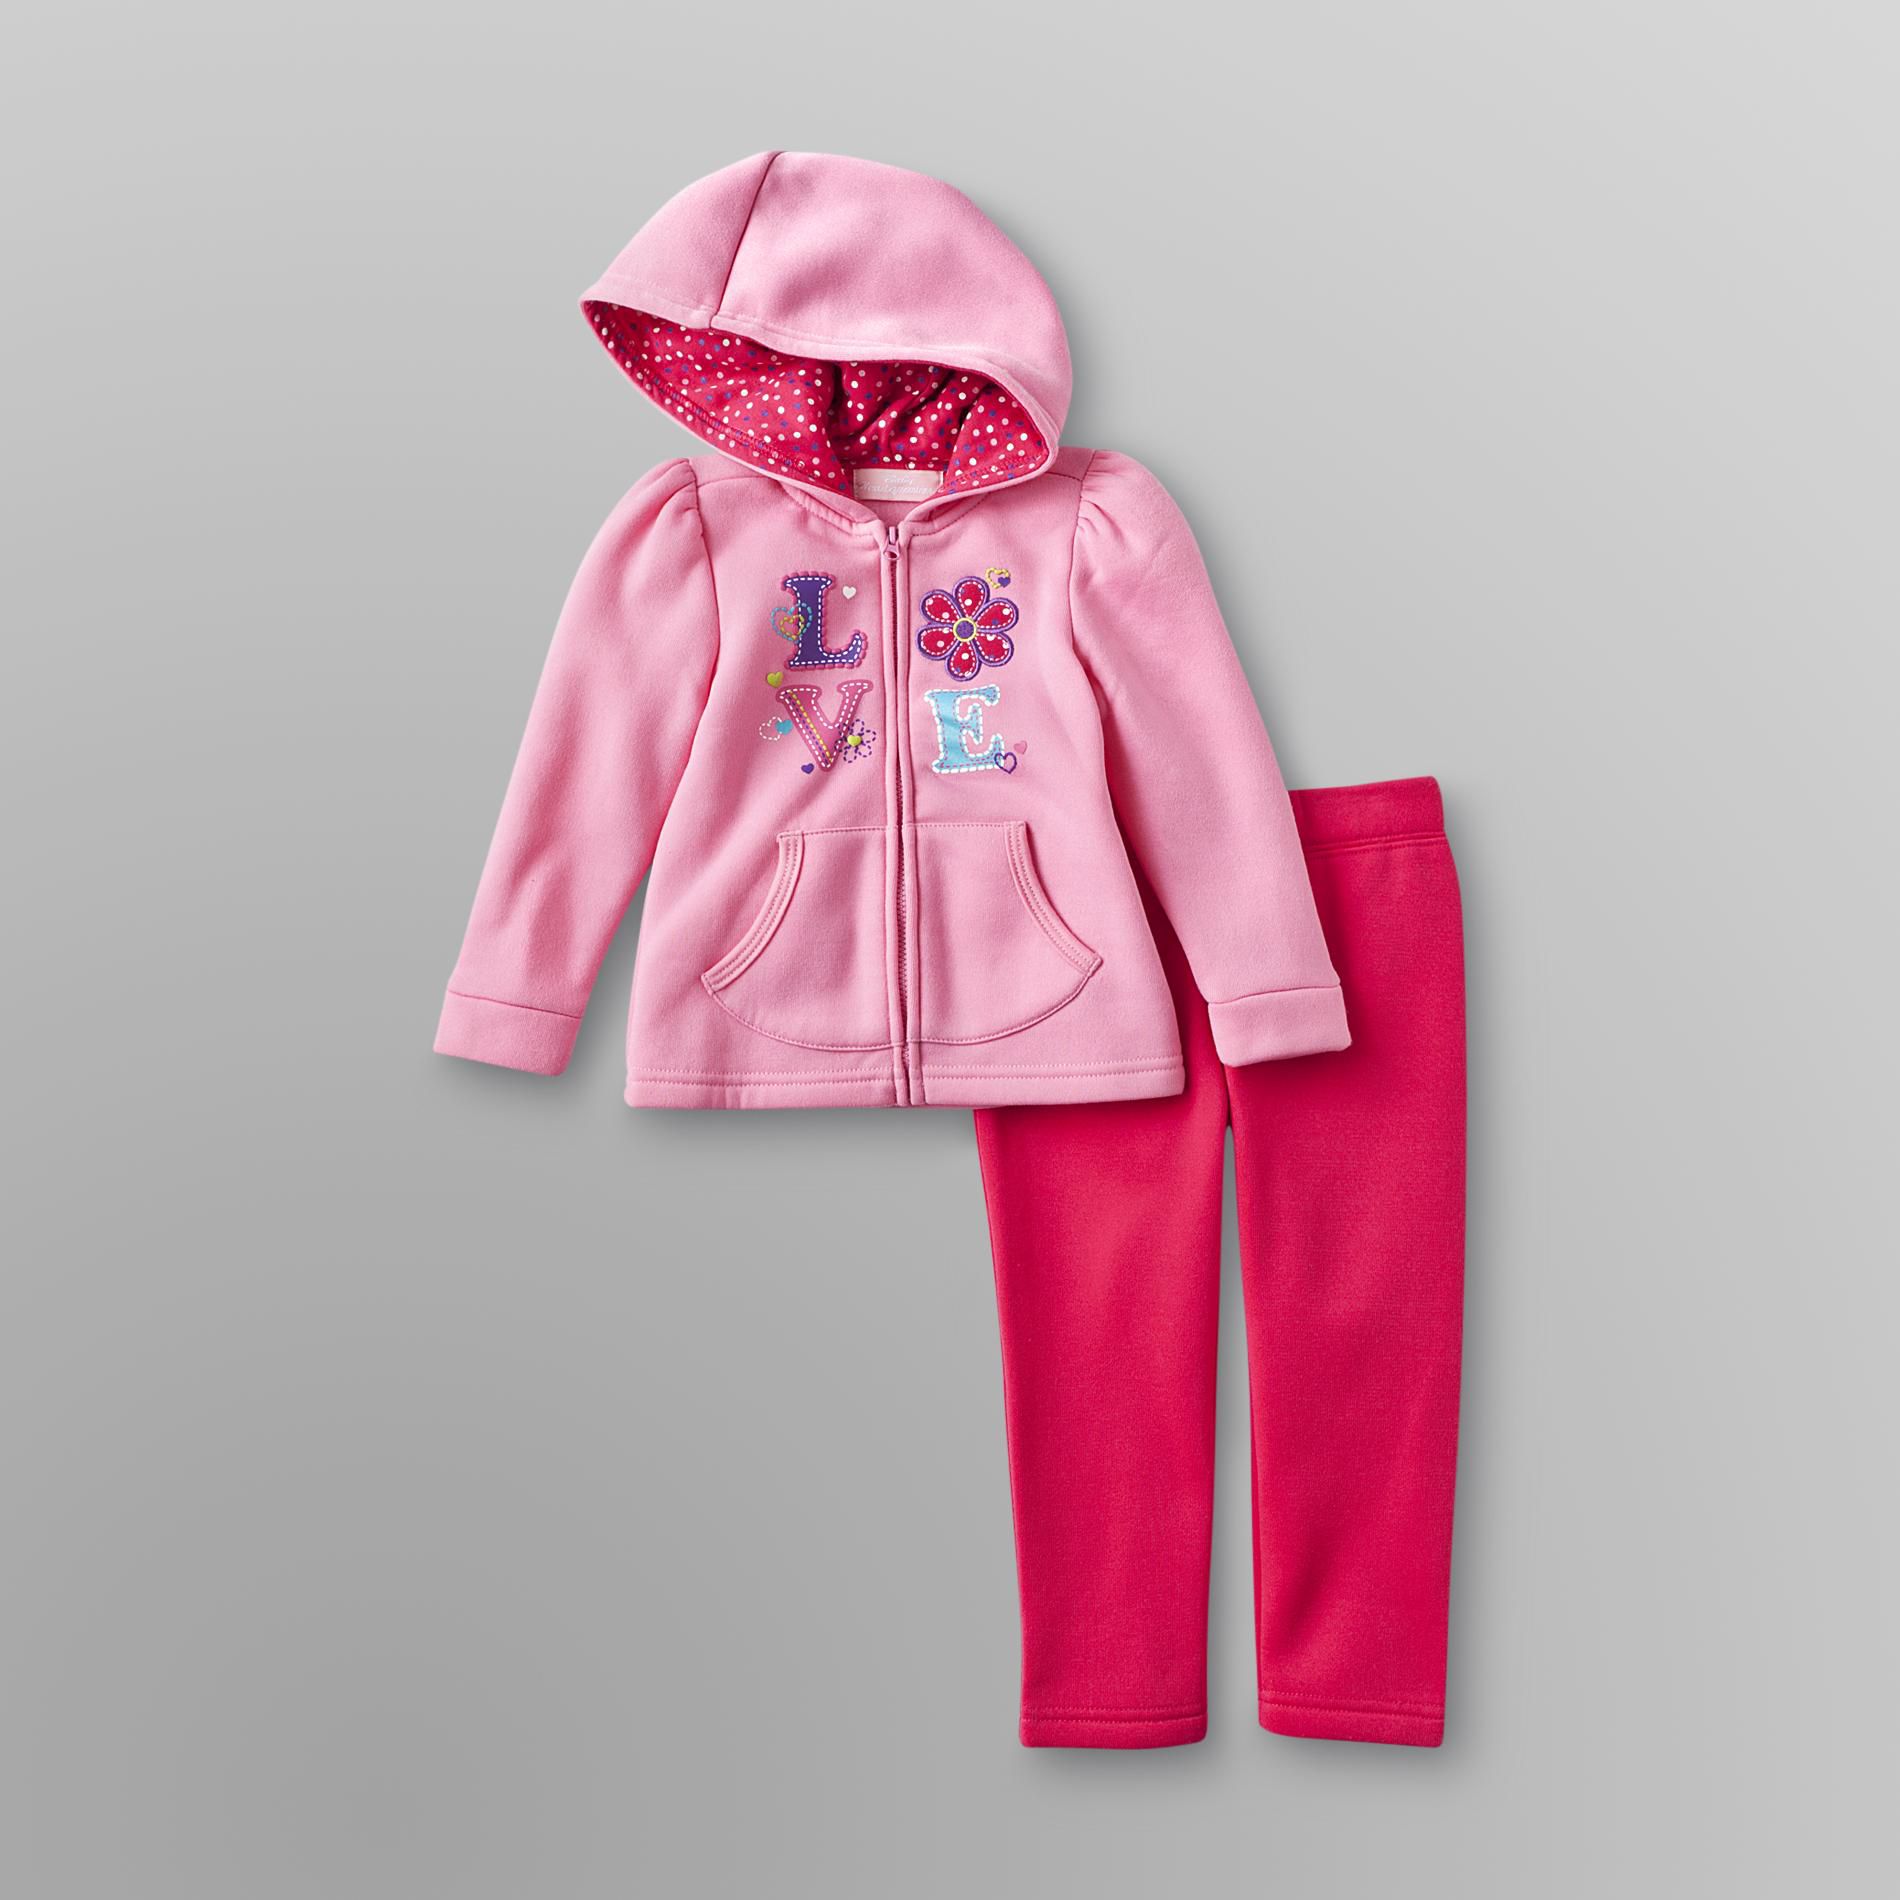 Kids Headquarters Infant Girl's Hoodie Jacket & Sweatpants - Love